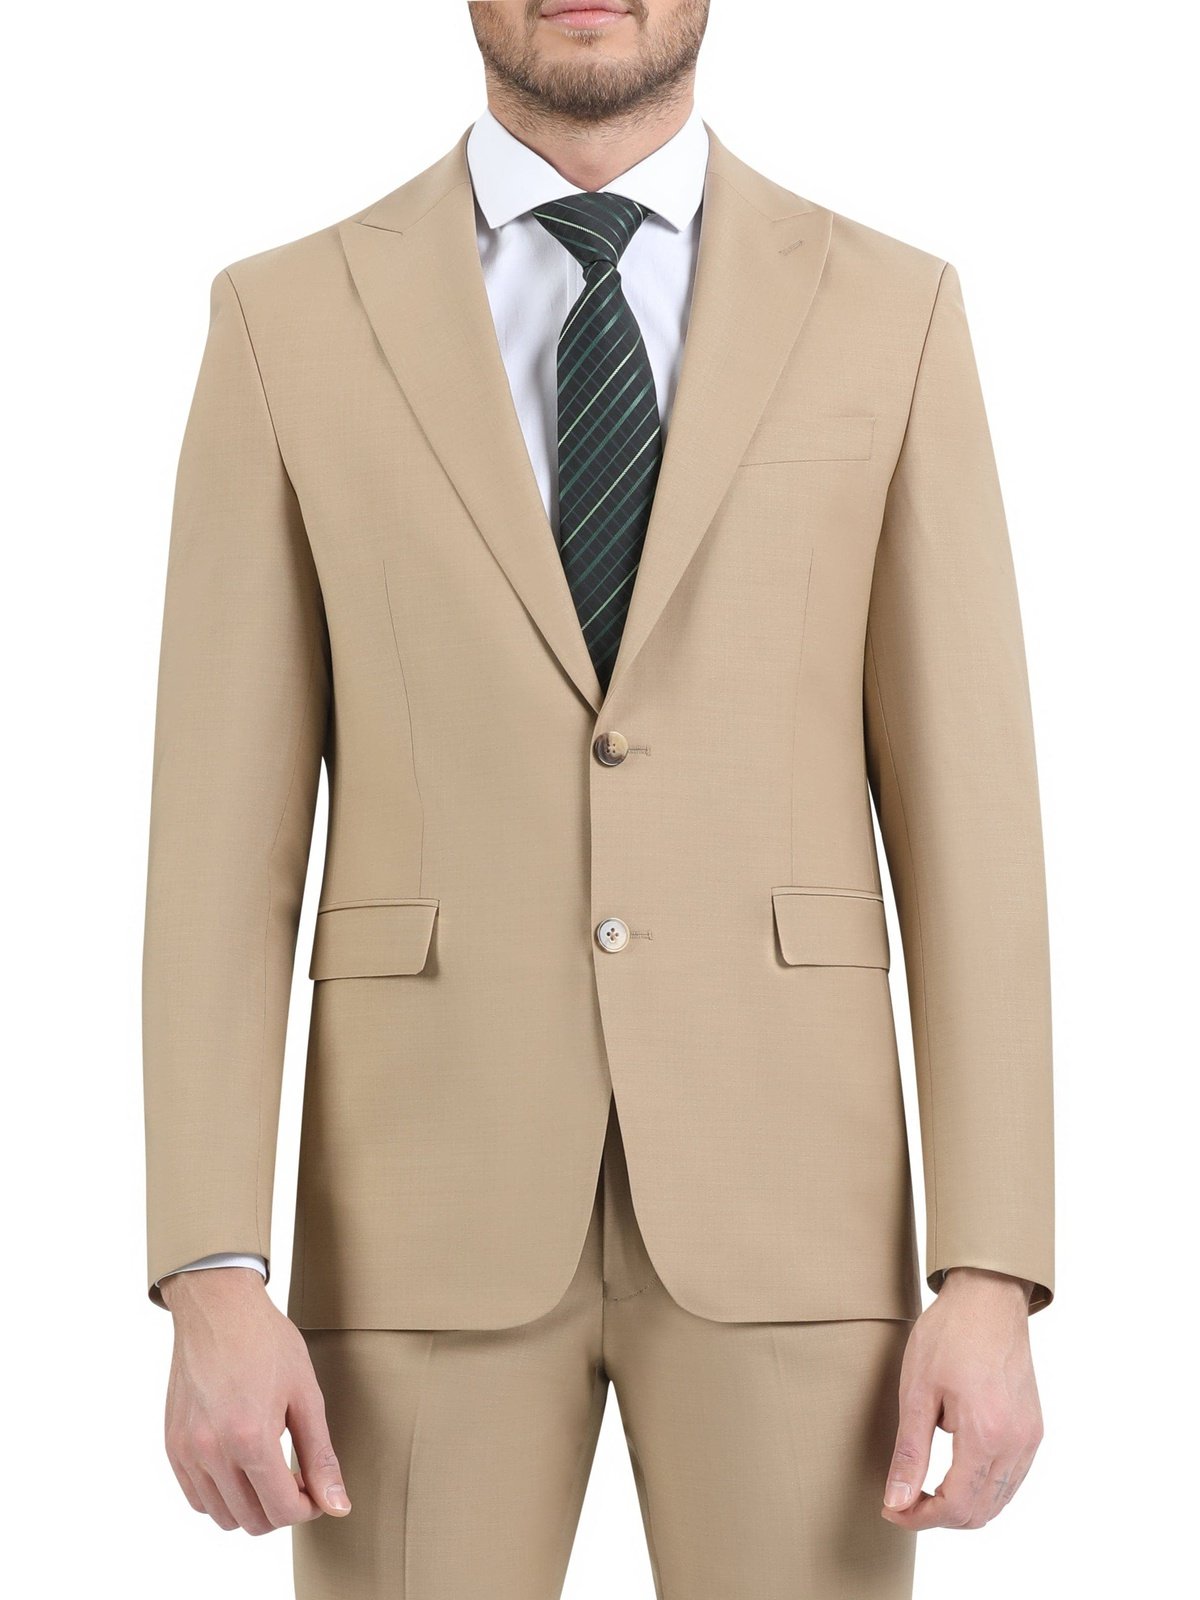 Di'nucci SUITS Di'nucci Solid Tan Peak Lapel Wool Suit